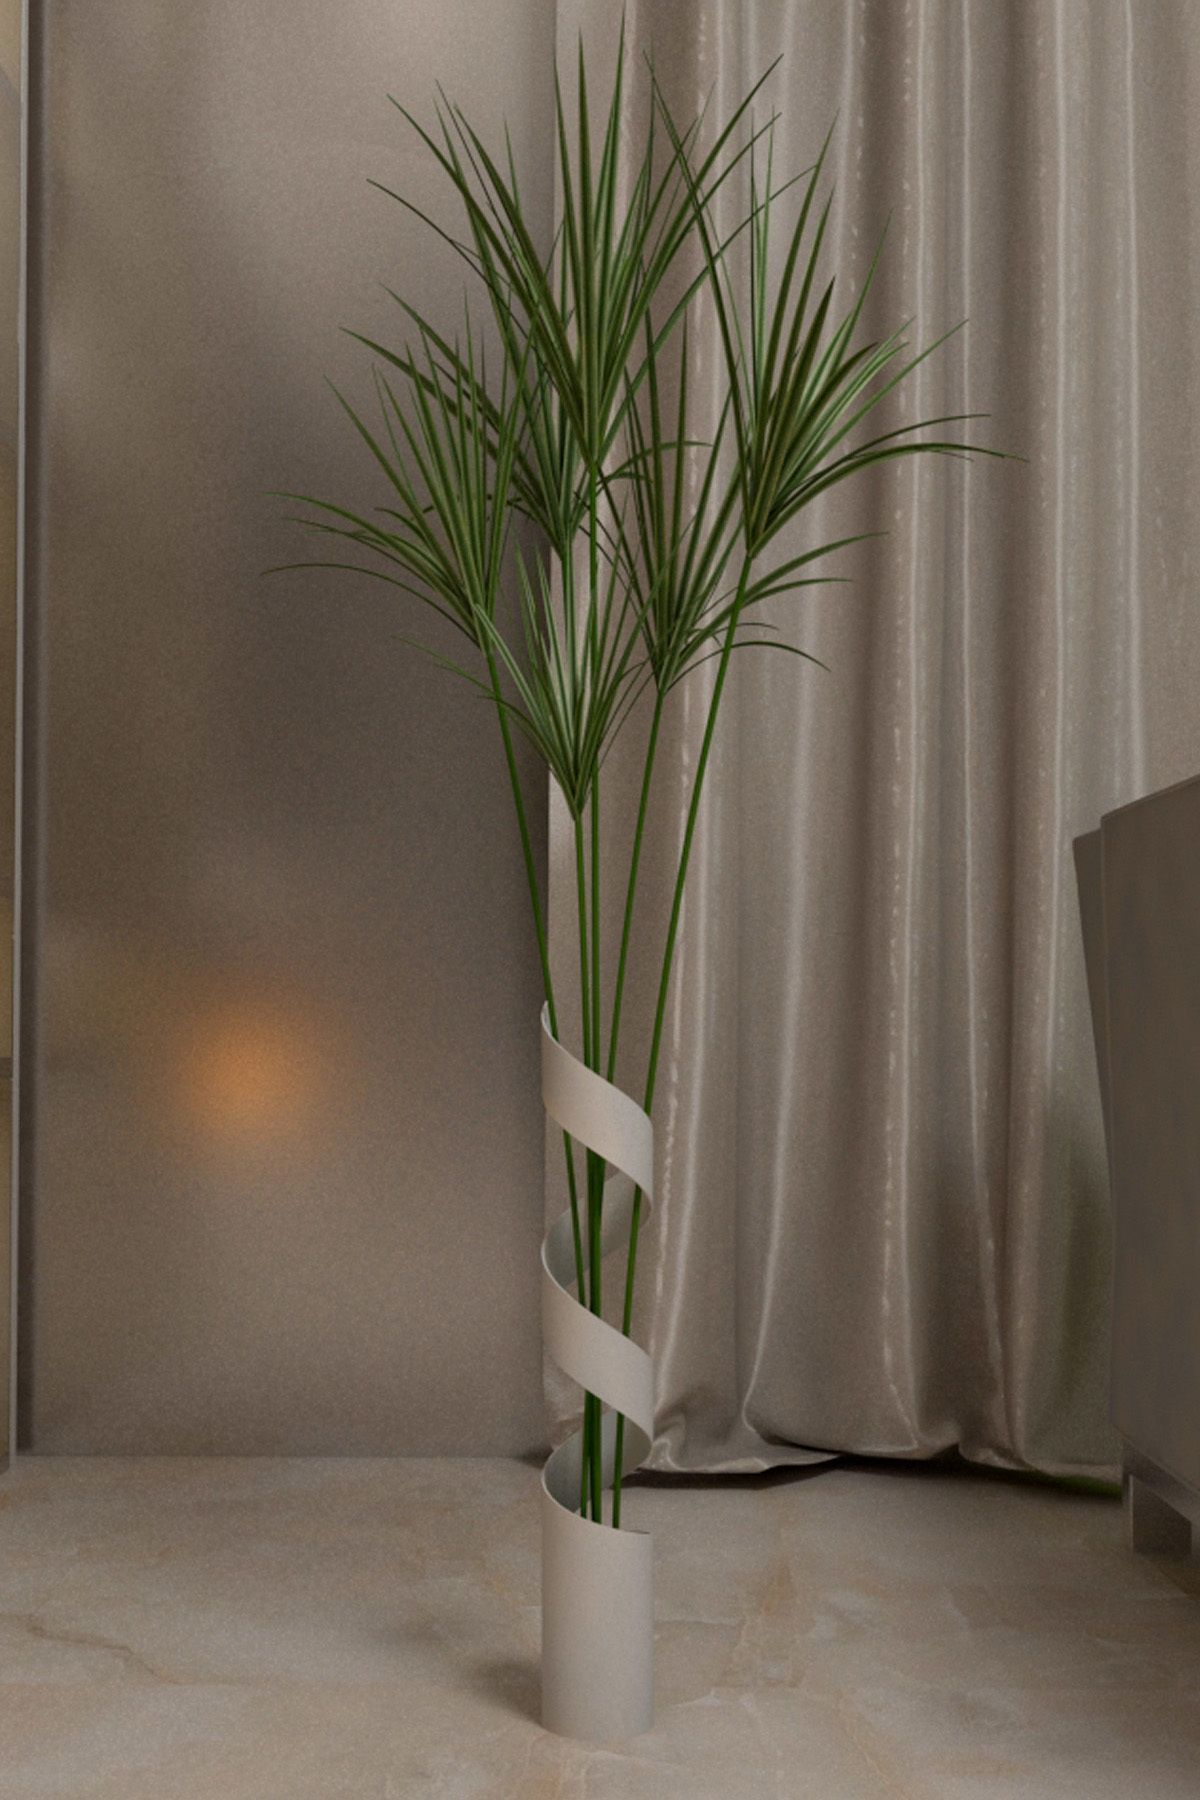 Segi Home Decor Beyaz Vazo Yükseklik 50 Cm Genişlik 7,6 Cm Pampas Vazosu Metal Çiçek Vazosu Sehpa Vazosu